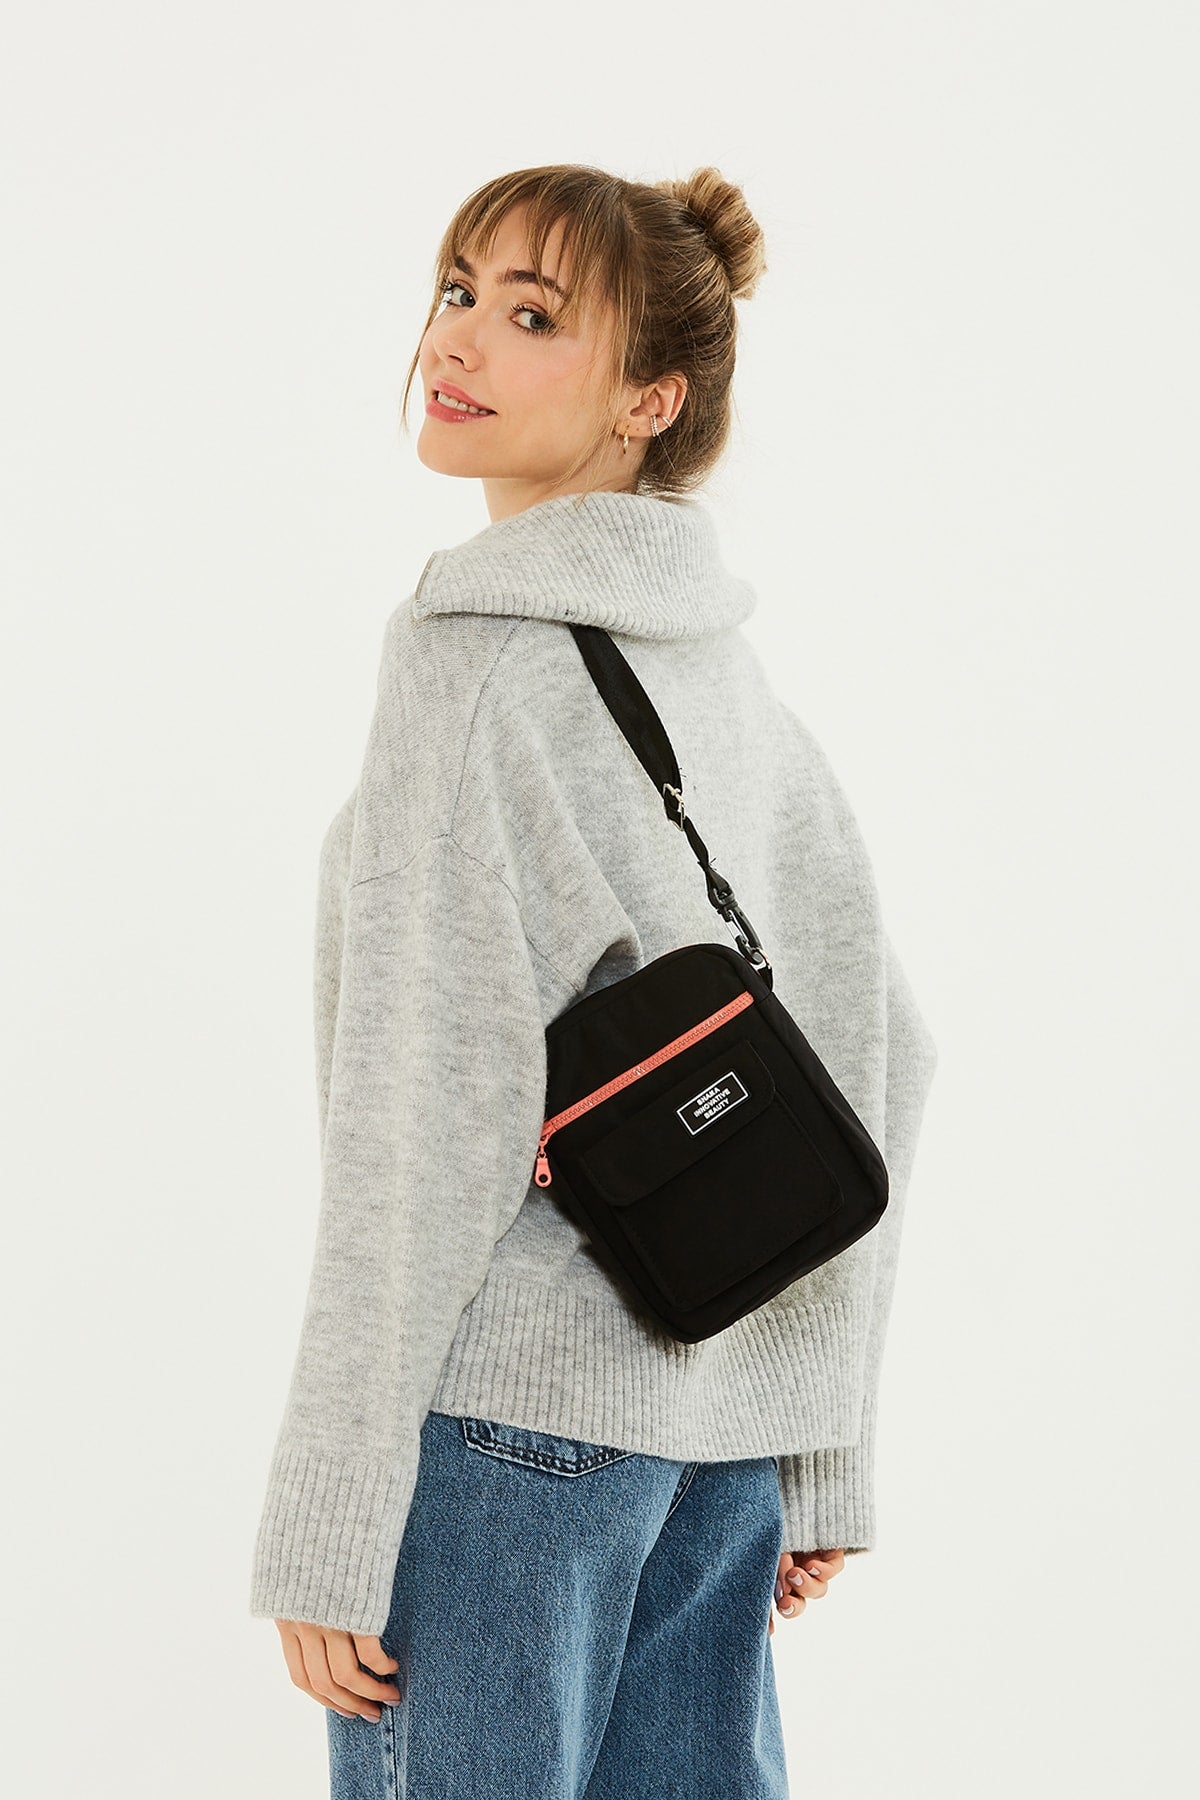 Orange Zipper Black U2 3-Compartment Cross Adjustable Strap Canvas Fabric Unisex Shoulder Bag B: